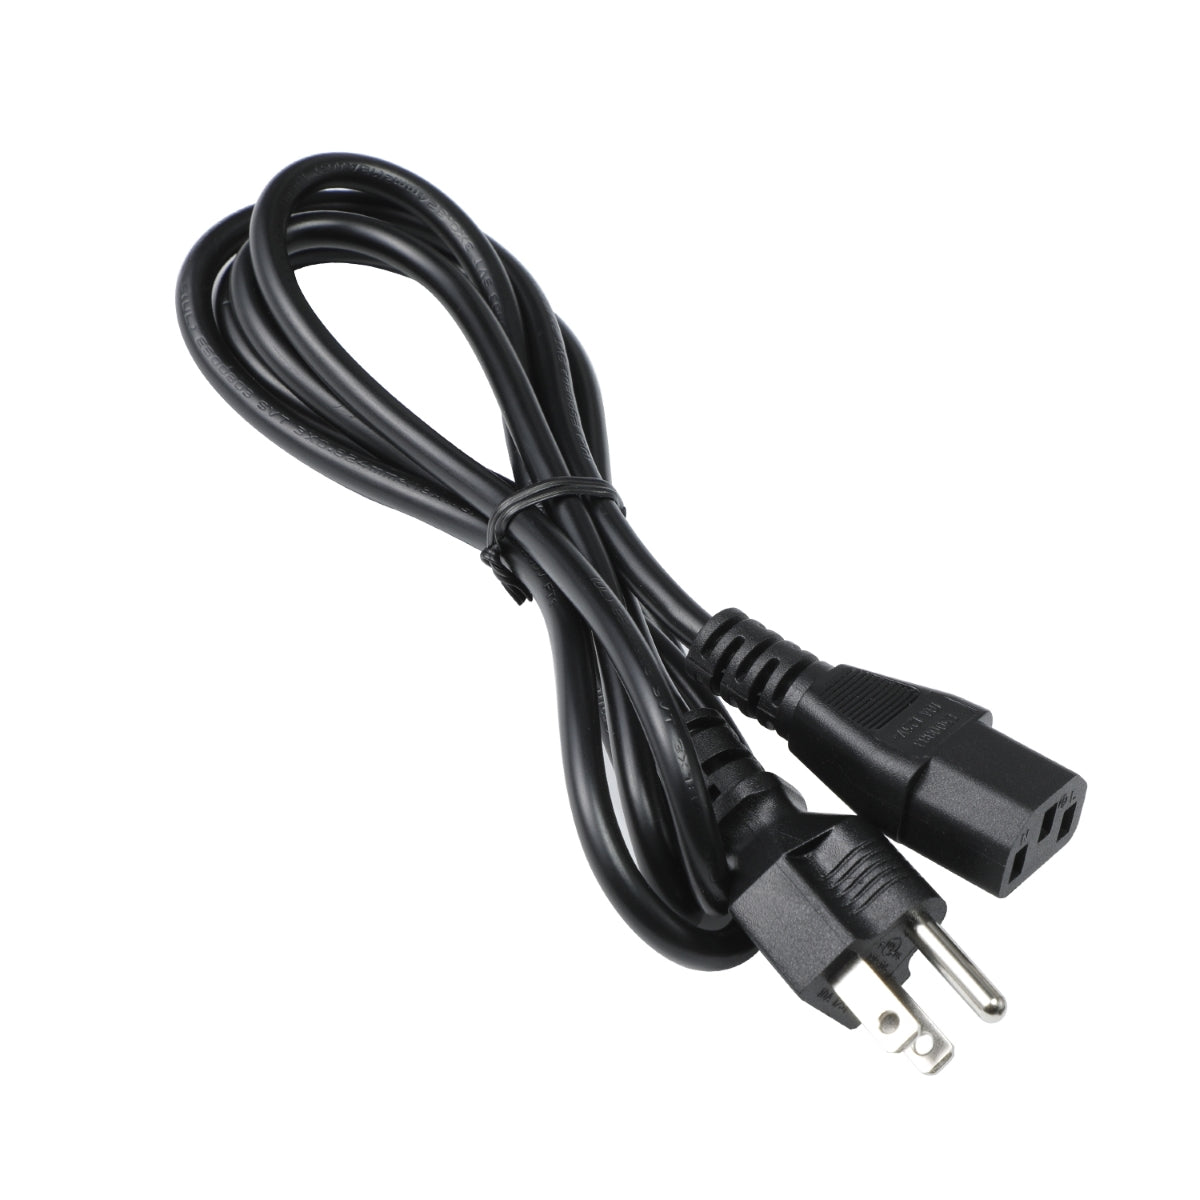 Power Cord for Dell UltraShap U2414H Monitor